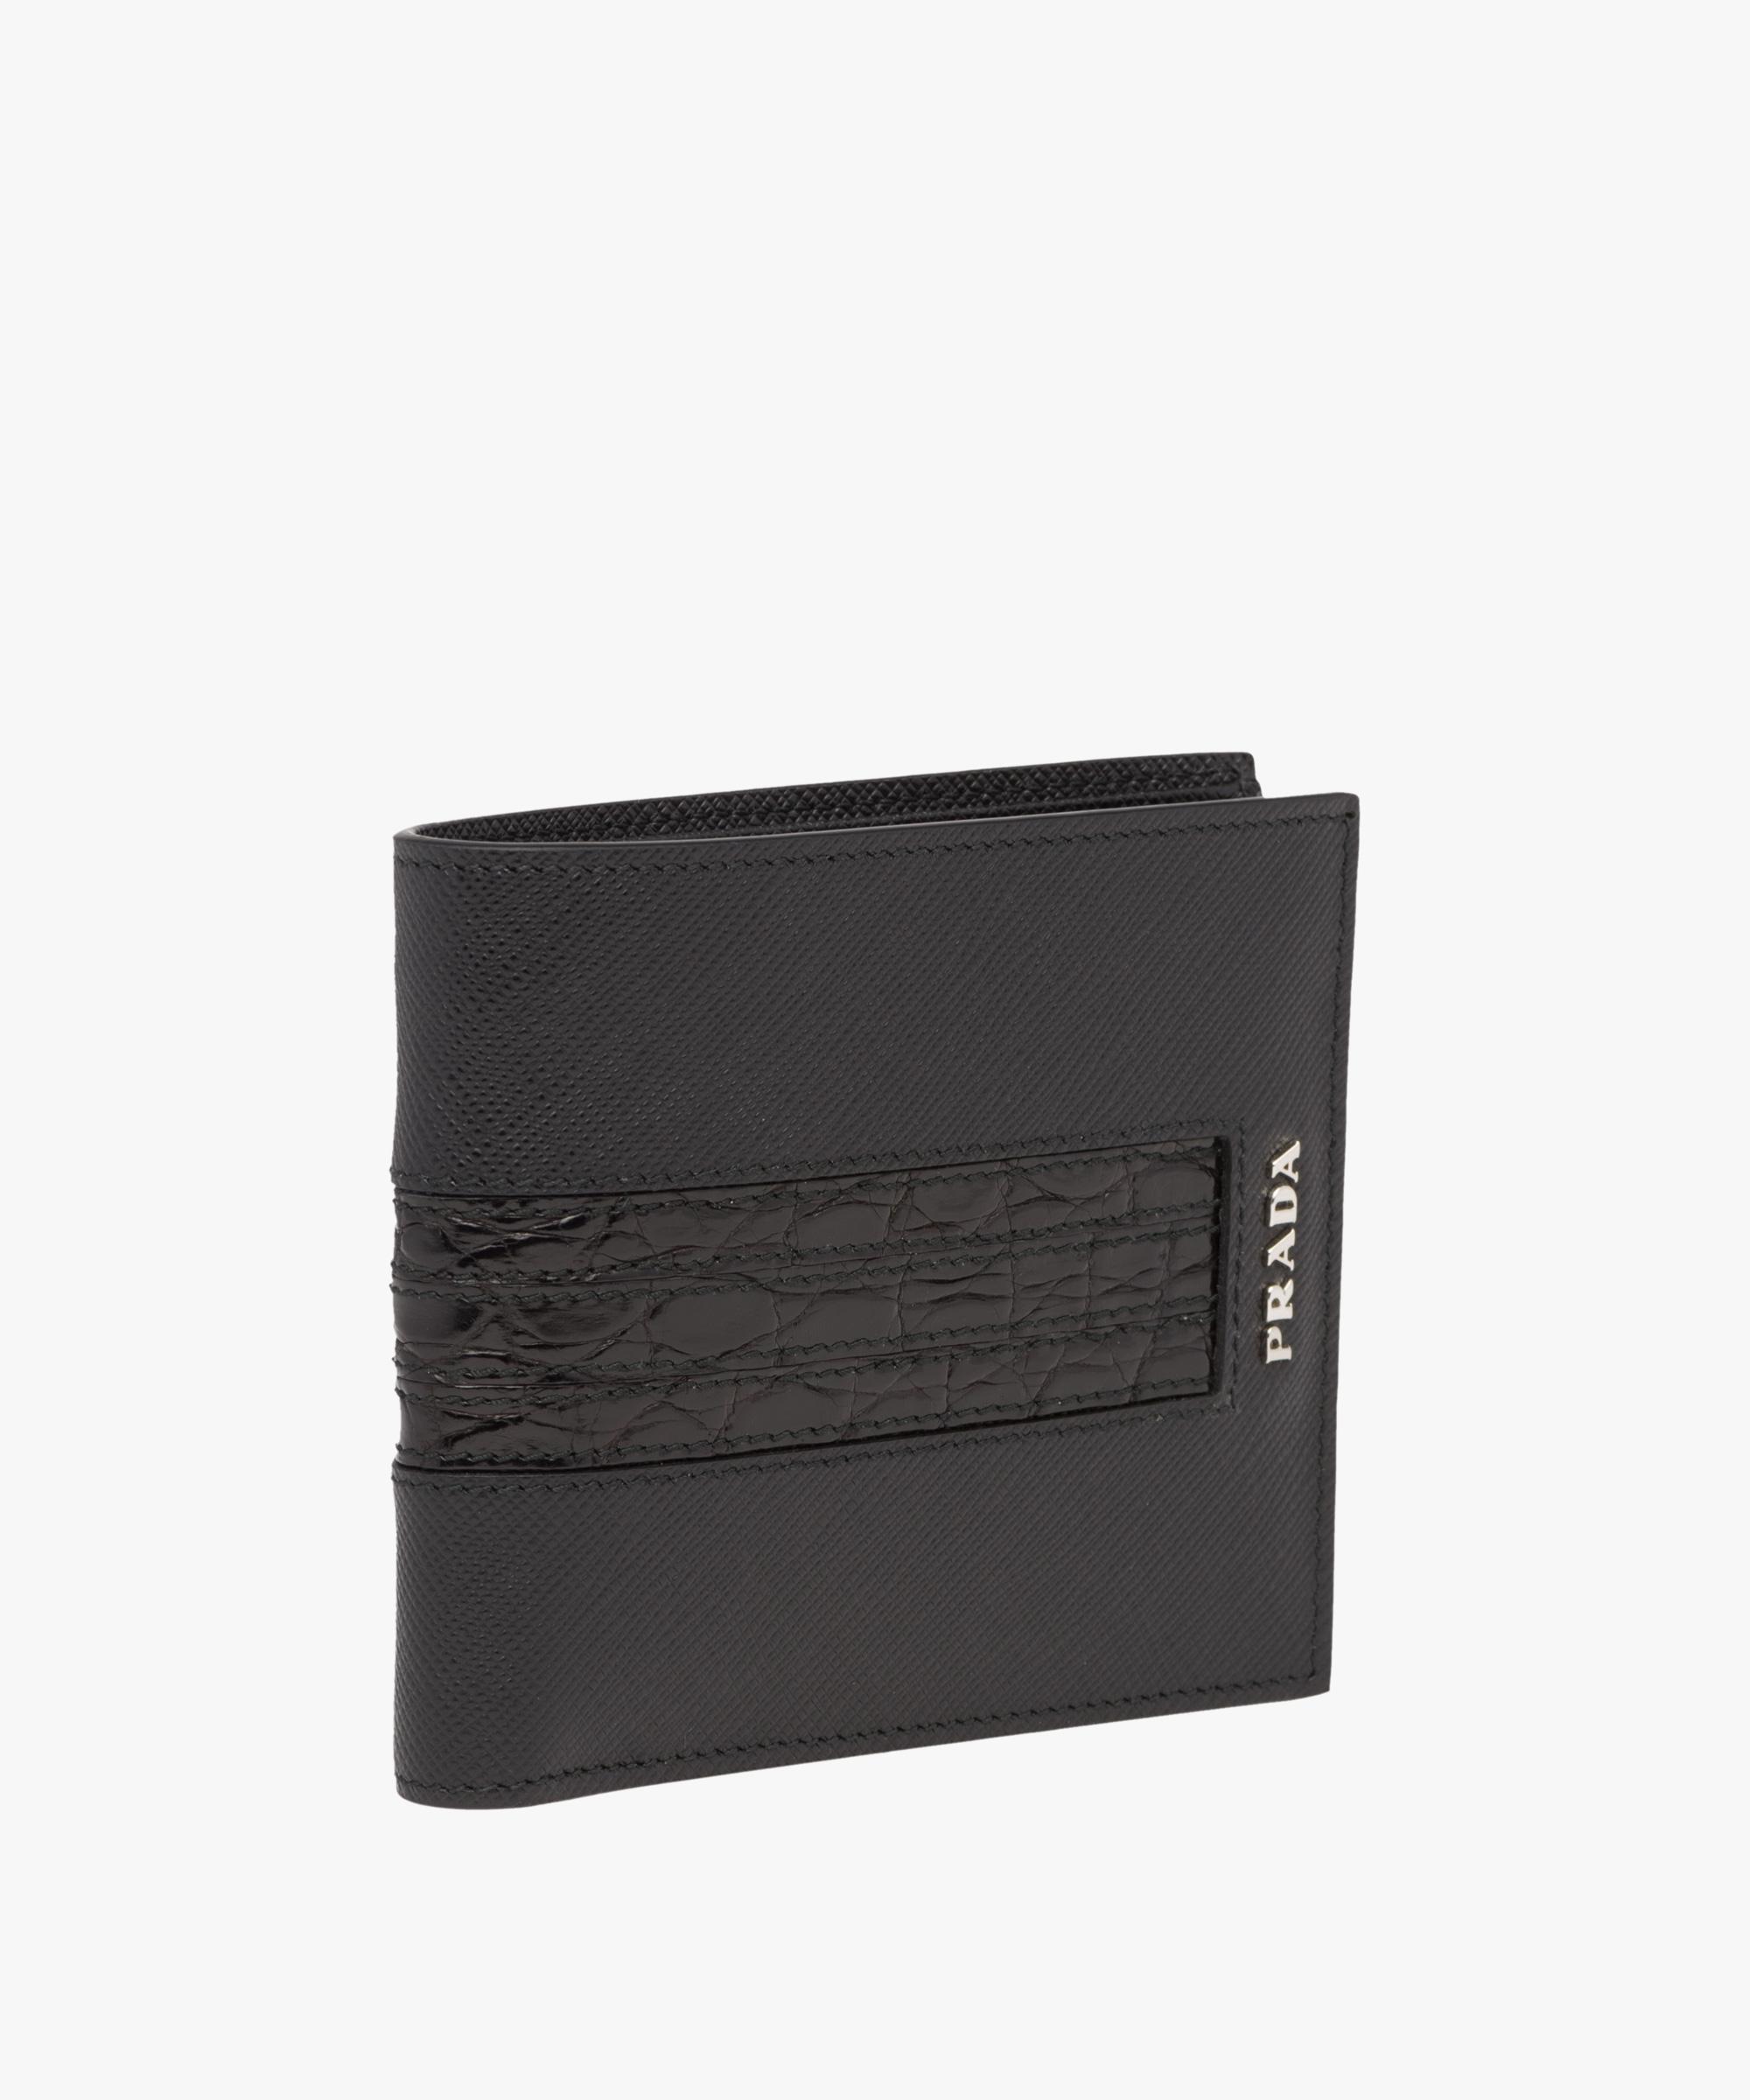 Prada Saffiano And Crocodile Leather Wallet in Black for Men - Lyst